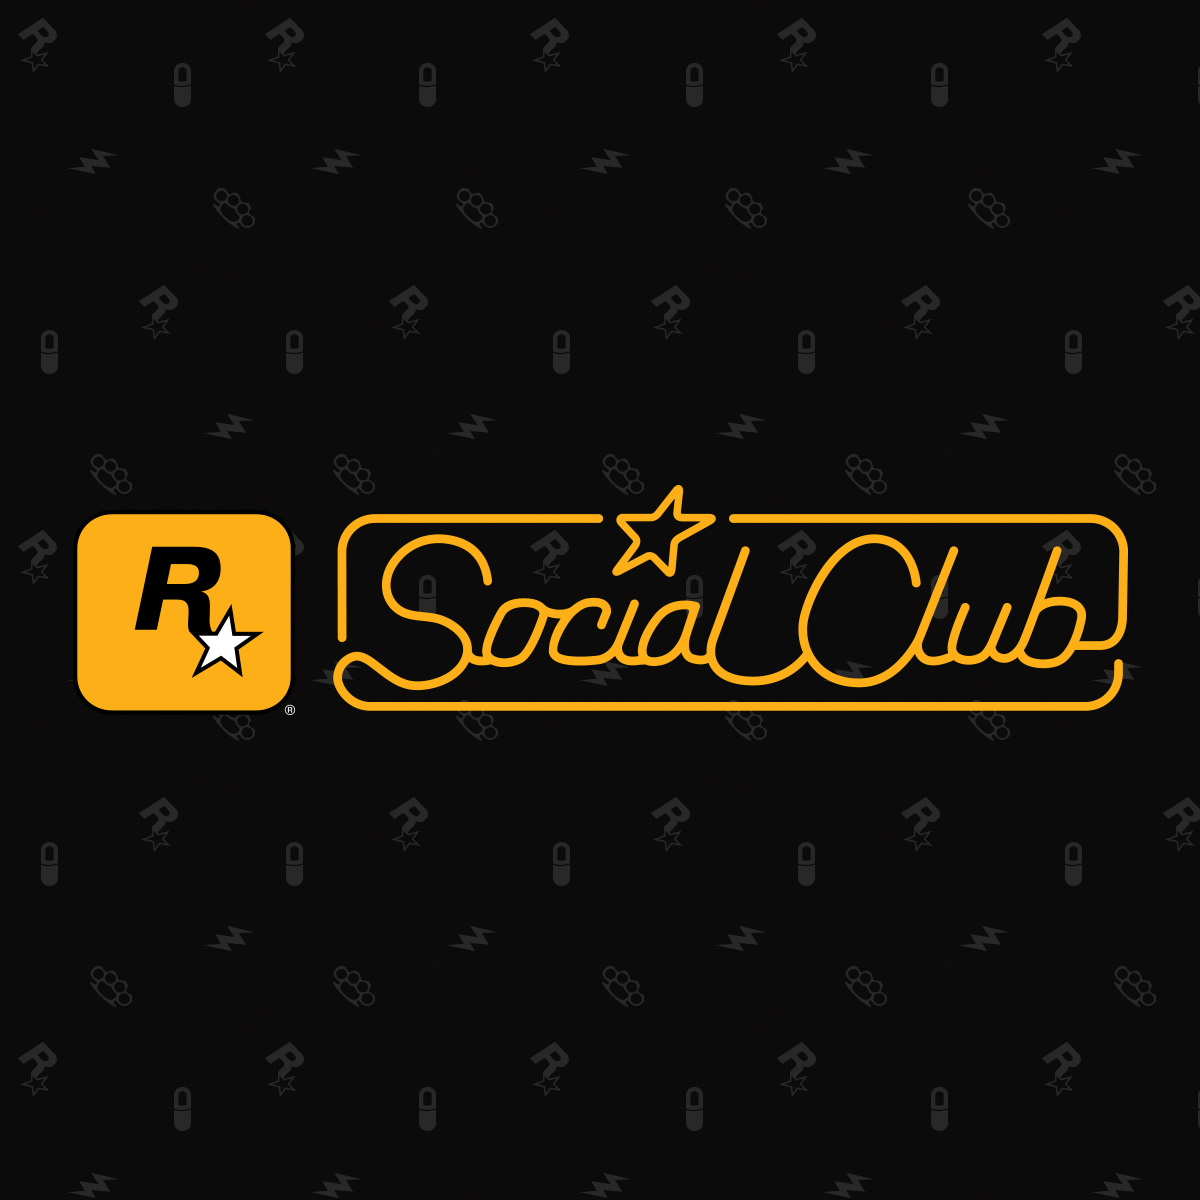 gta v social club patch download